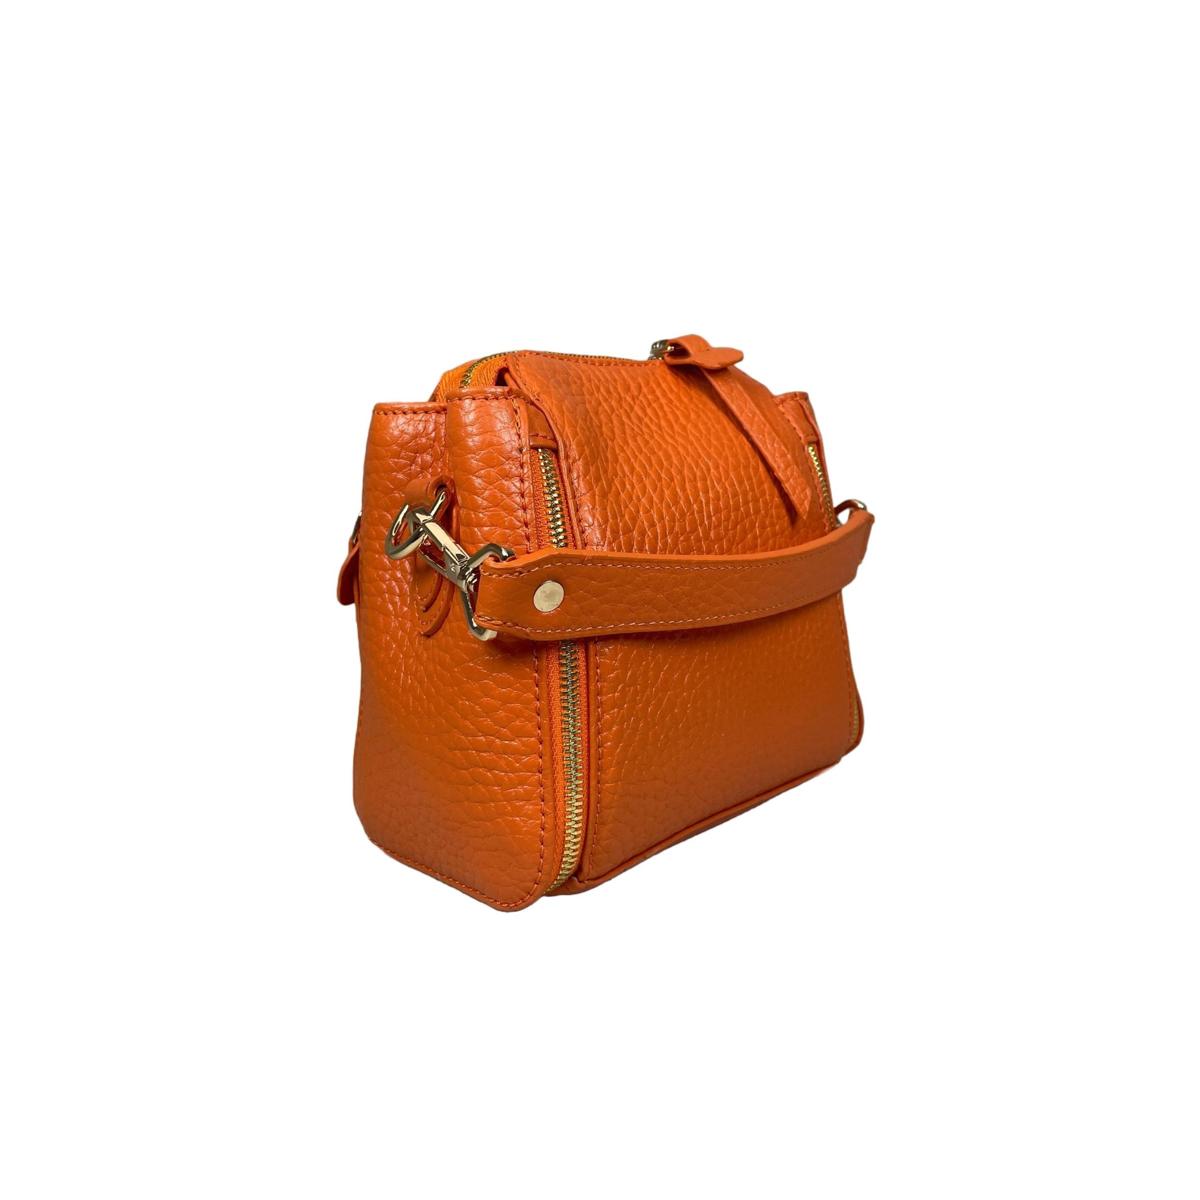 LeatherLuxe - Orange Leather Handbag Shoulder Bag for Women Genuine leather Designer Premium leather bag for women leather hobo tote messenger bag Leather Accessories Leather Shop Leather Goods